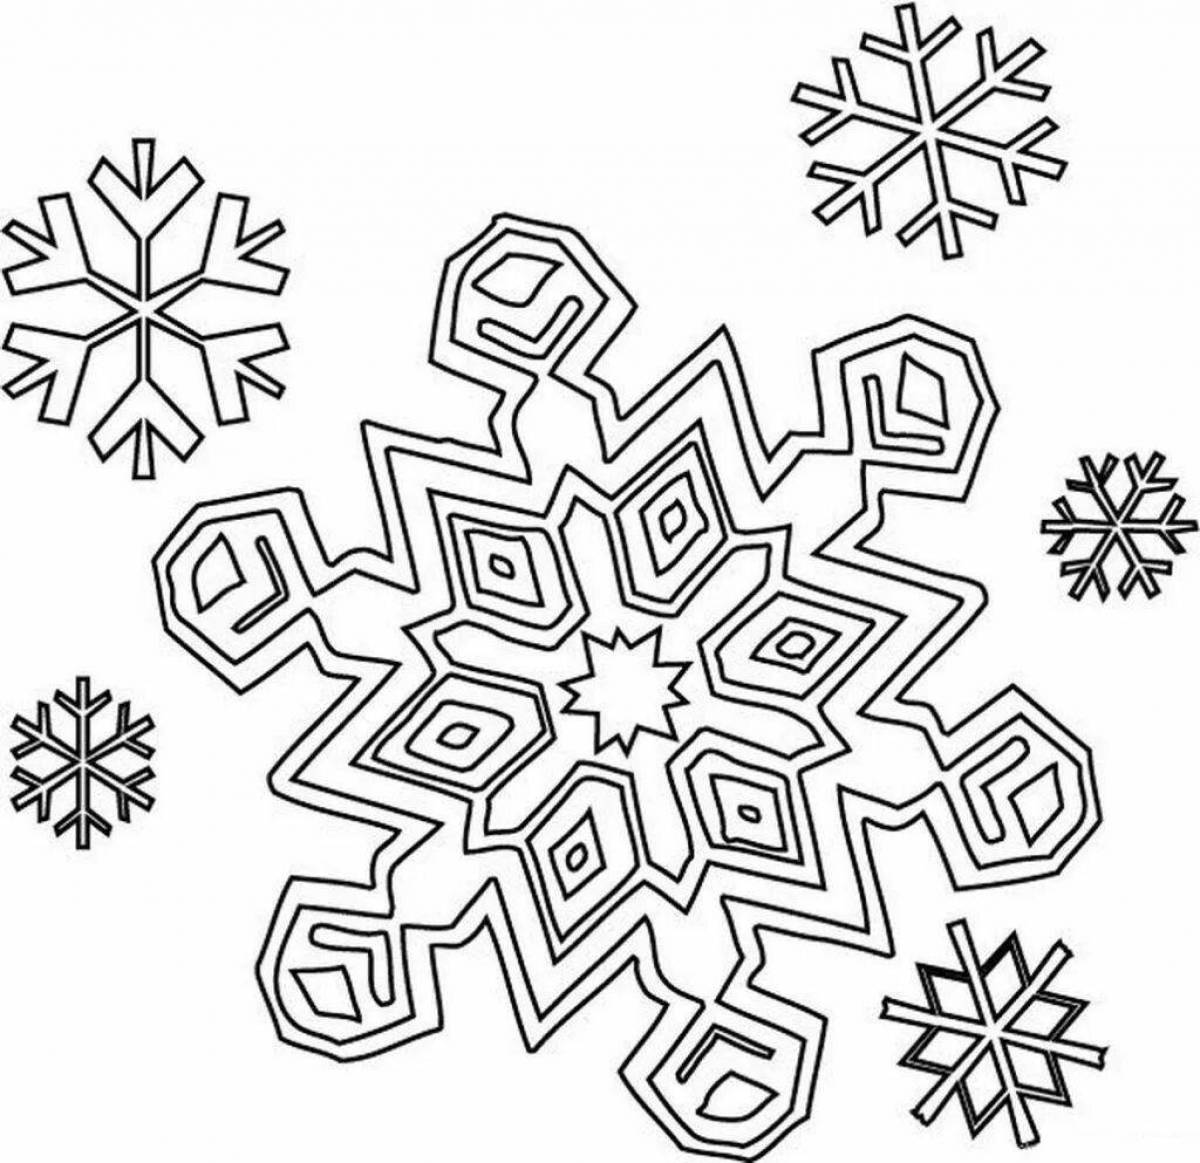 Fancy coloring snowflakes for children 4-5 years old in kindergarten